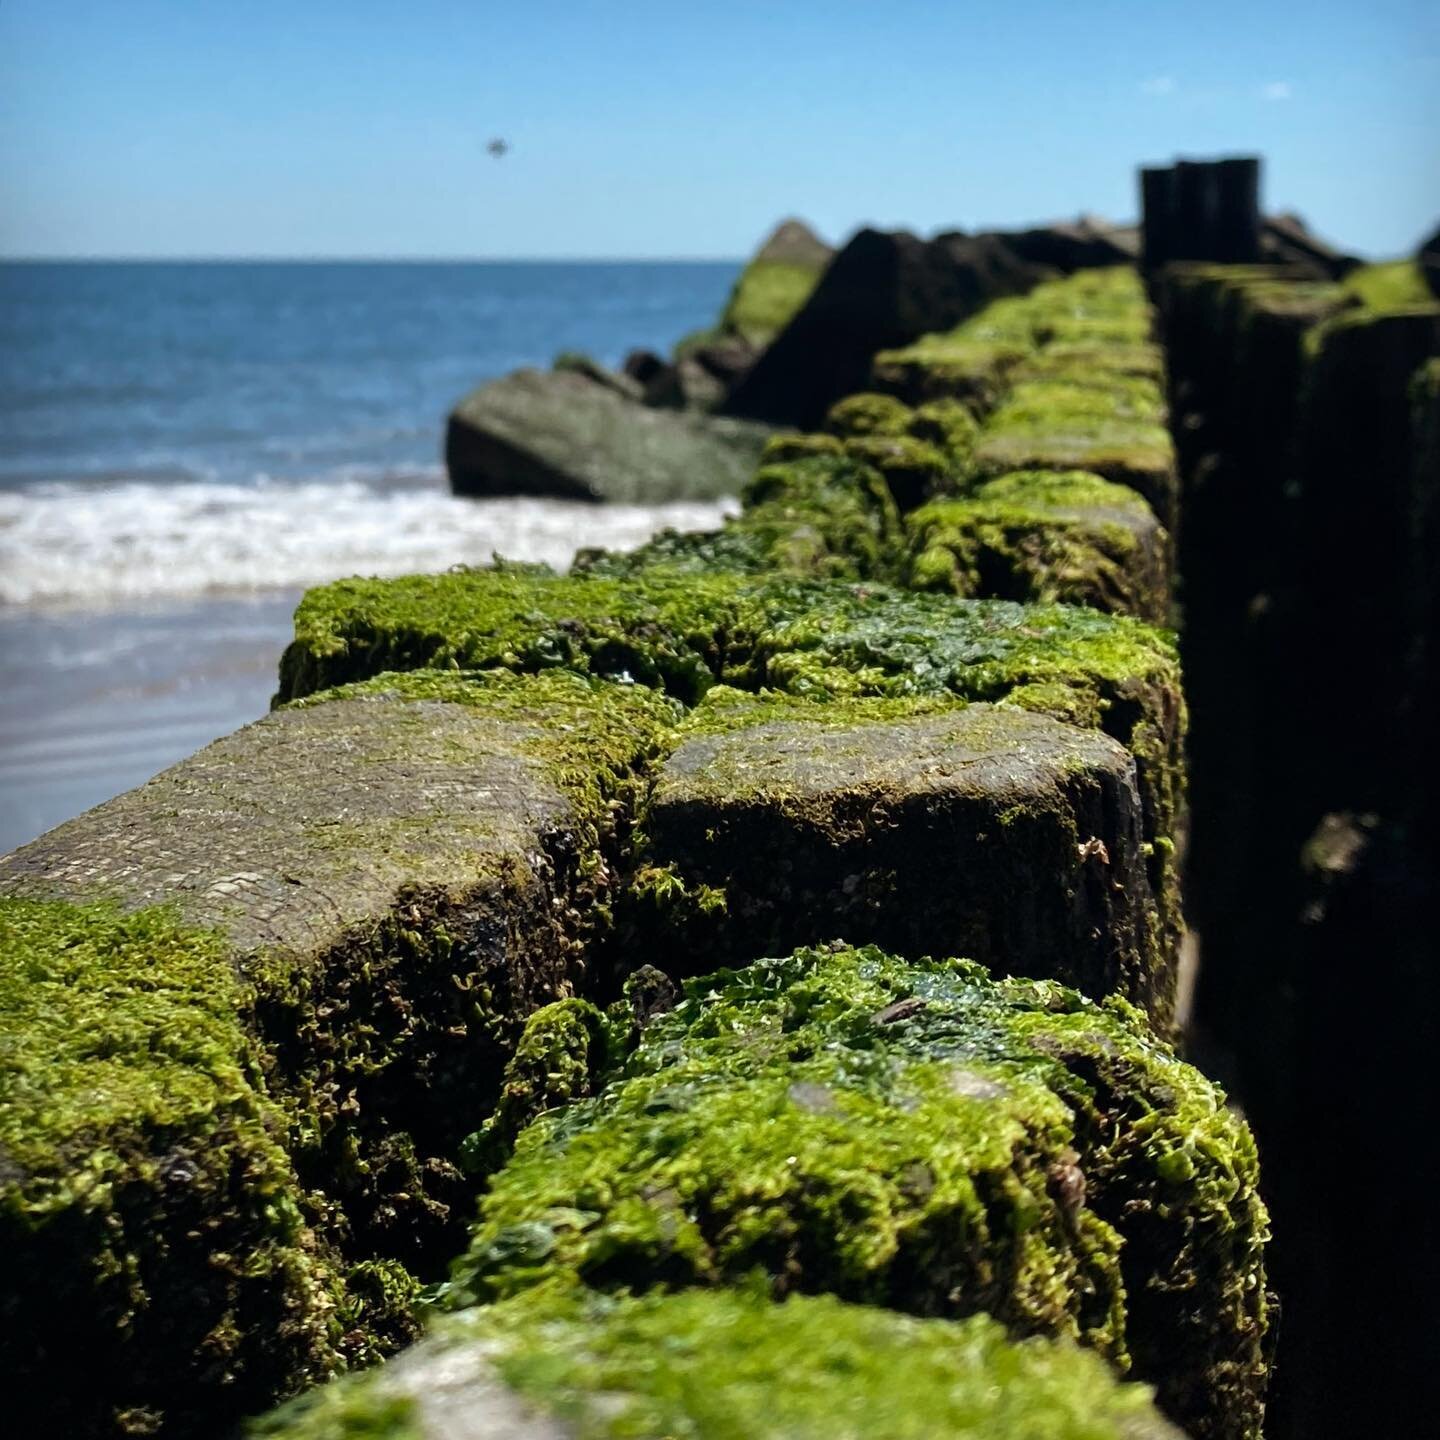 At the beach 

📷 iPhone 11 - May 2023

#beach #rocks #moss #ocean #coneyisland #sunburn #water #nyc